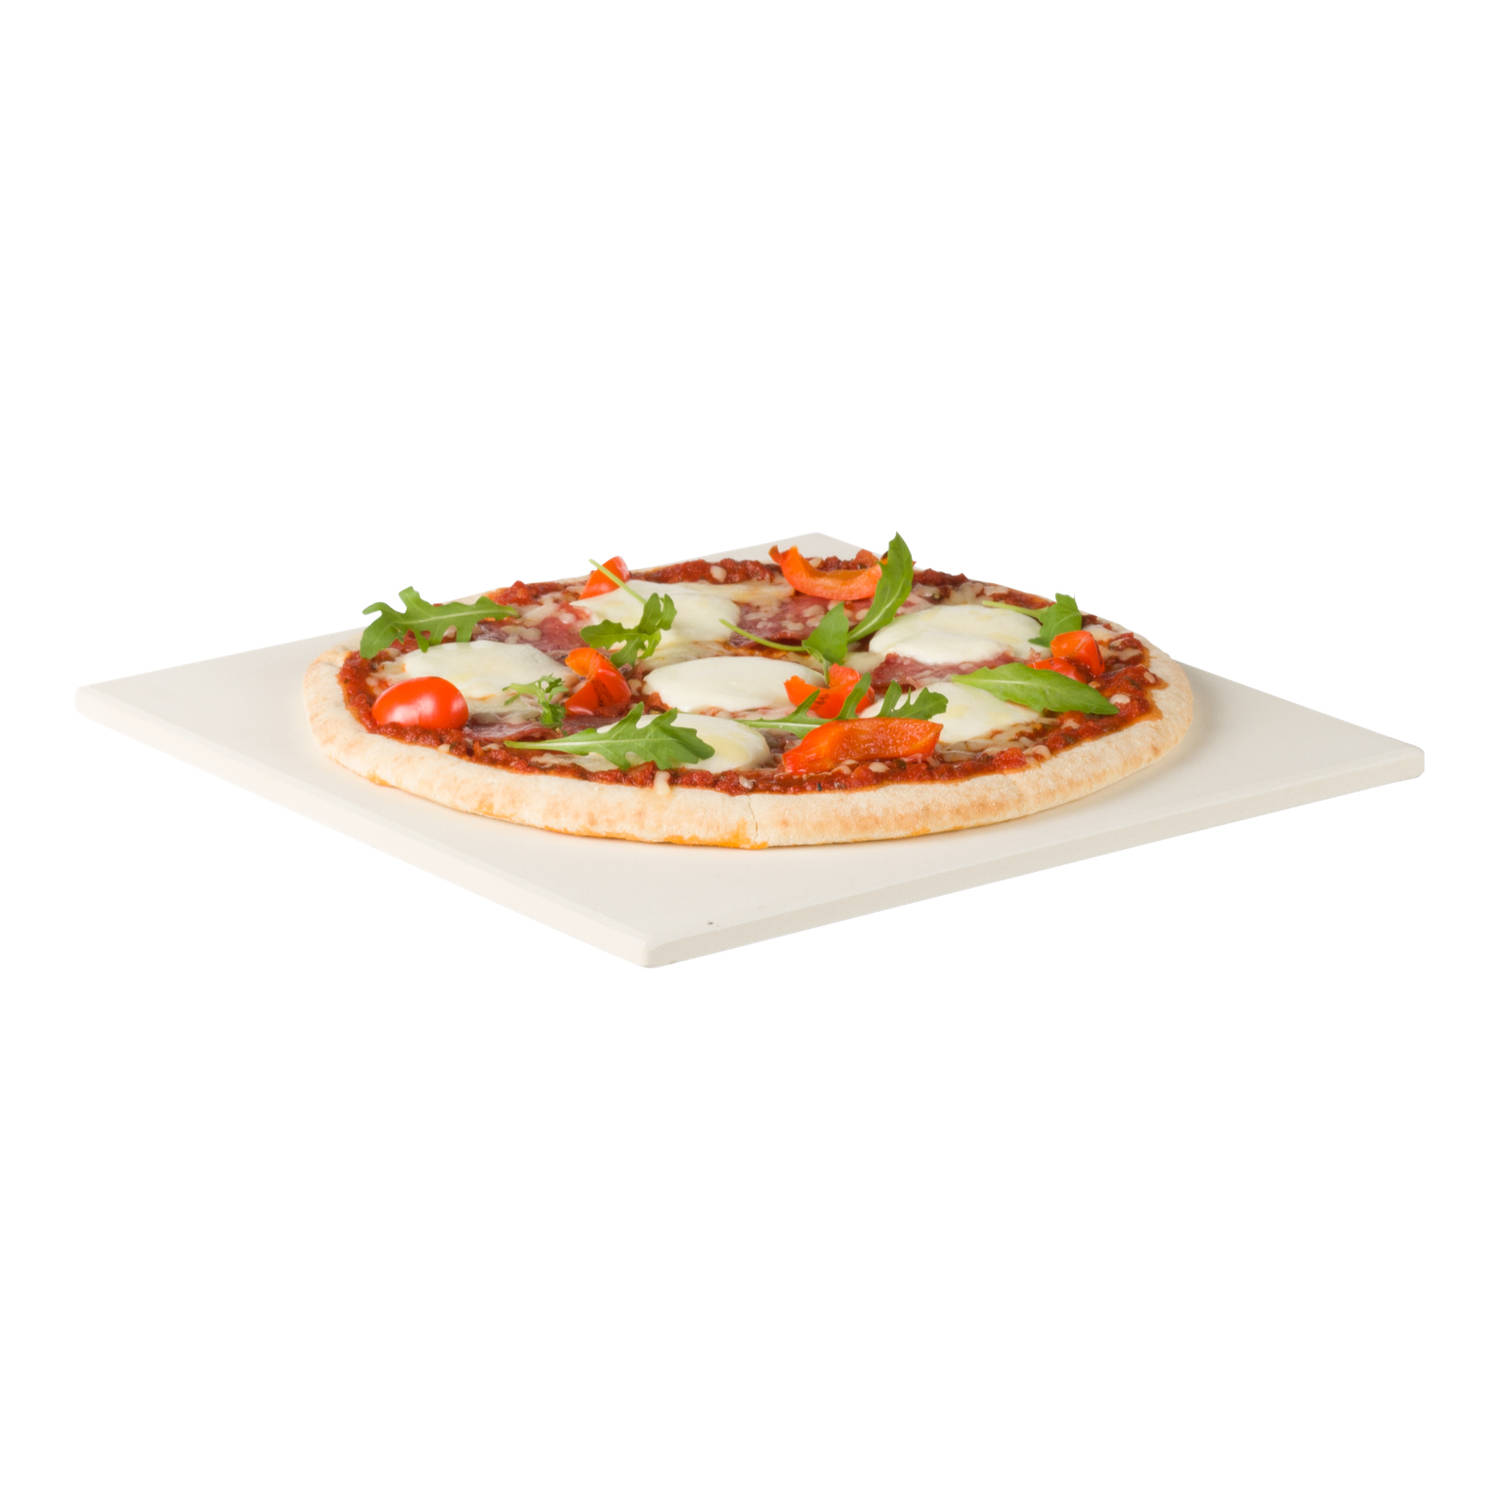 lengte hengel Ochtend gymnastiek Royal Patio pizza oven | Blokker